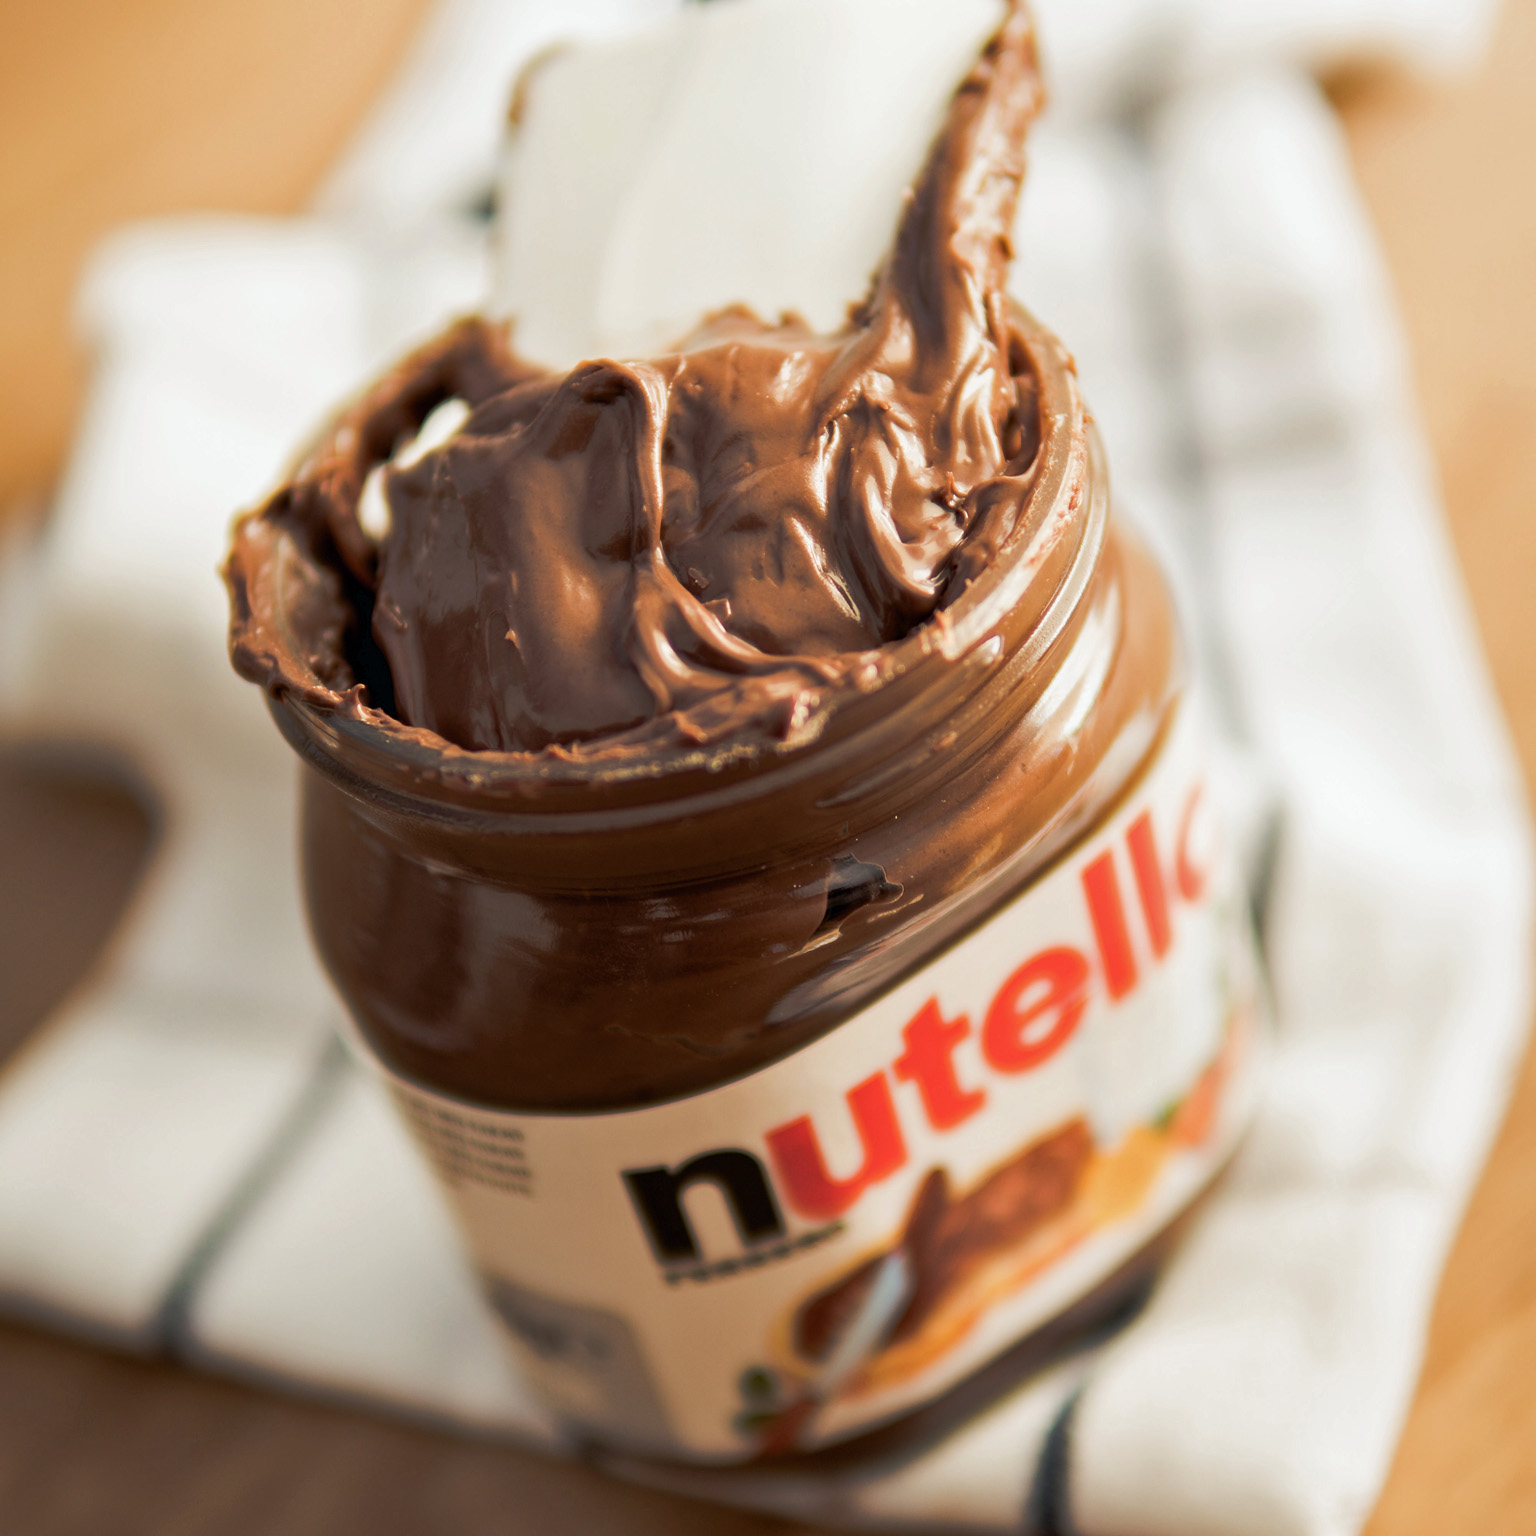 February 5, 2020 - World Nutella® Day